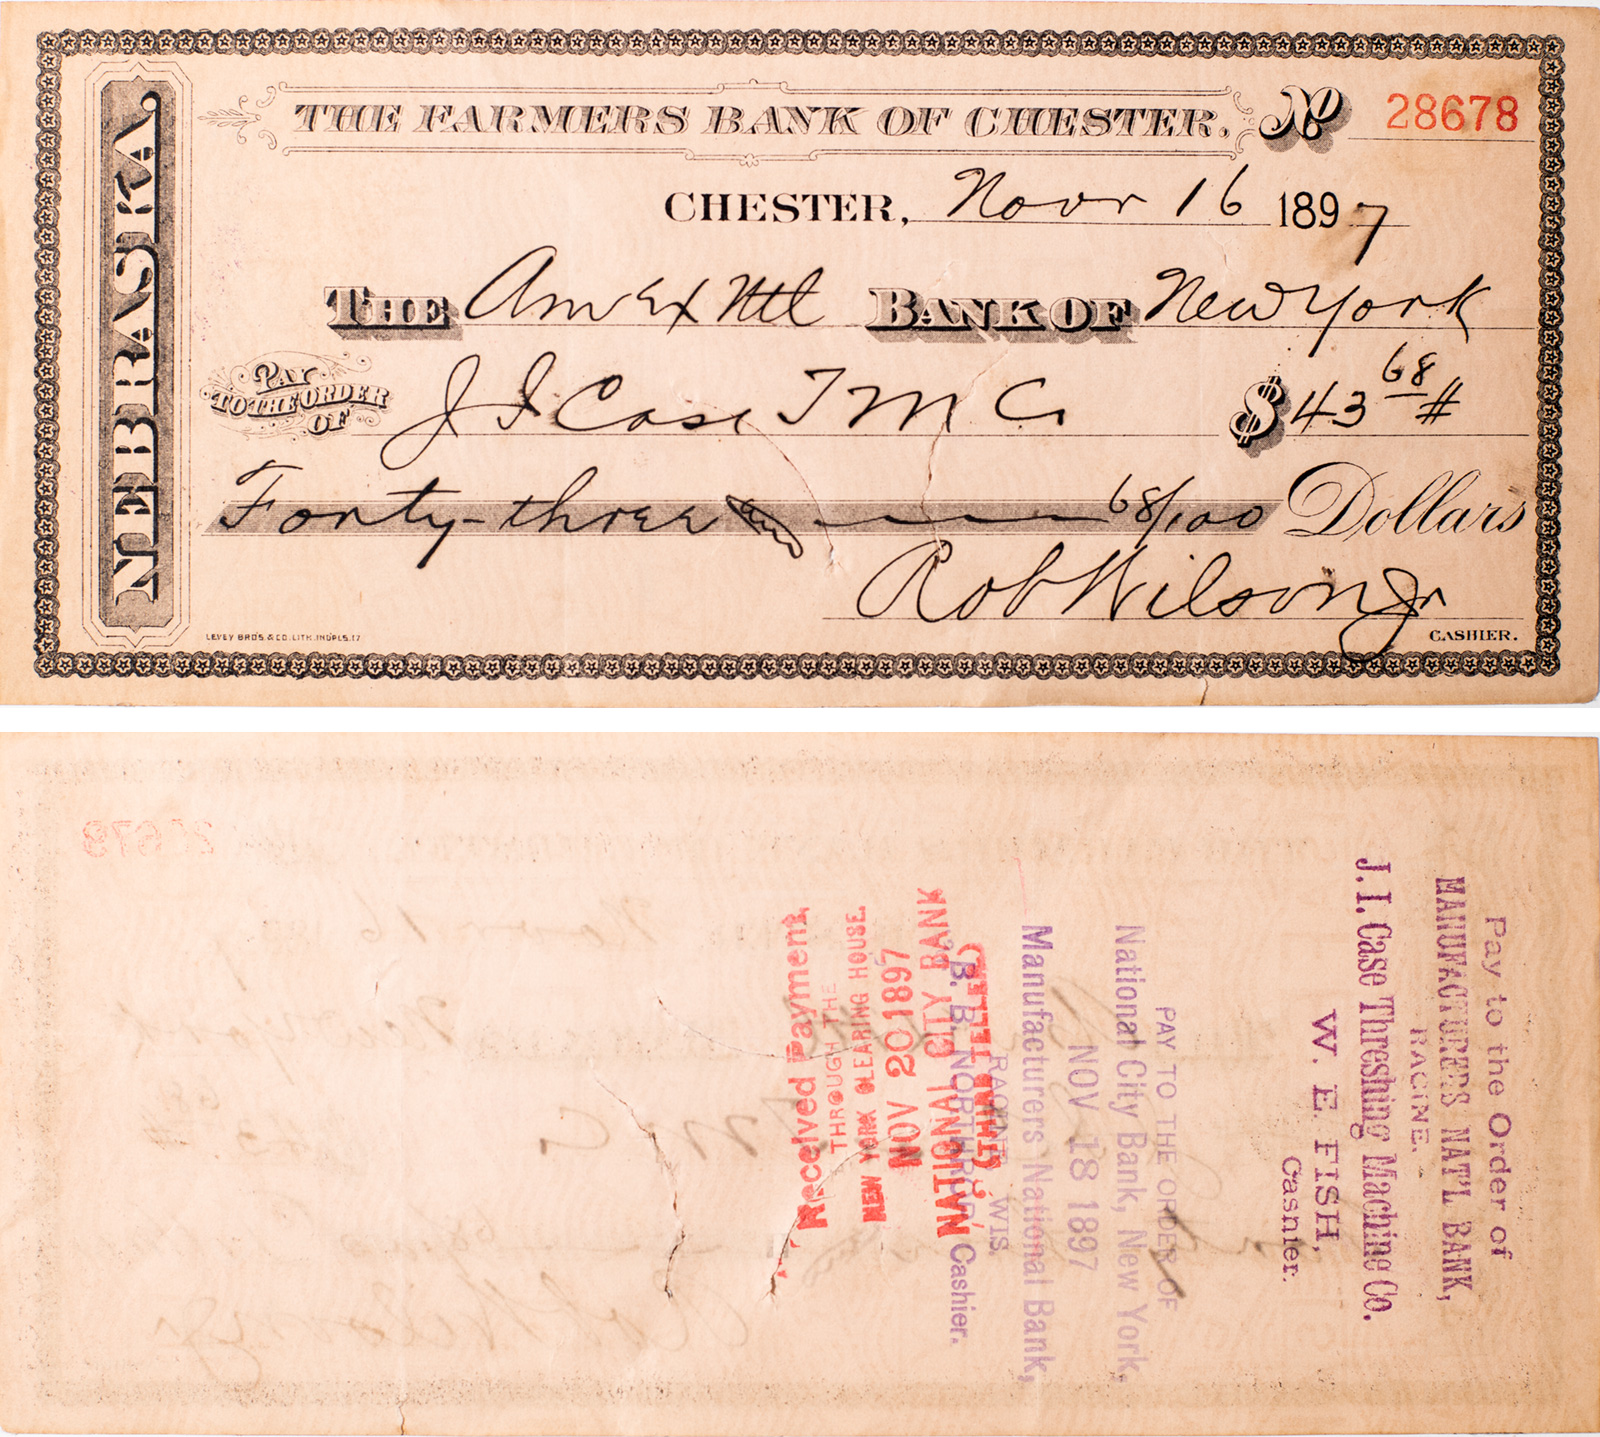 Farmers Bank of Chester Nebraska Cancelled Check 1897-image